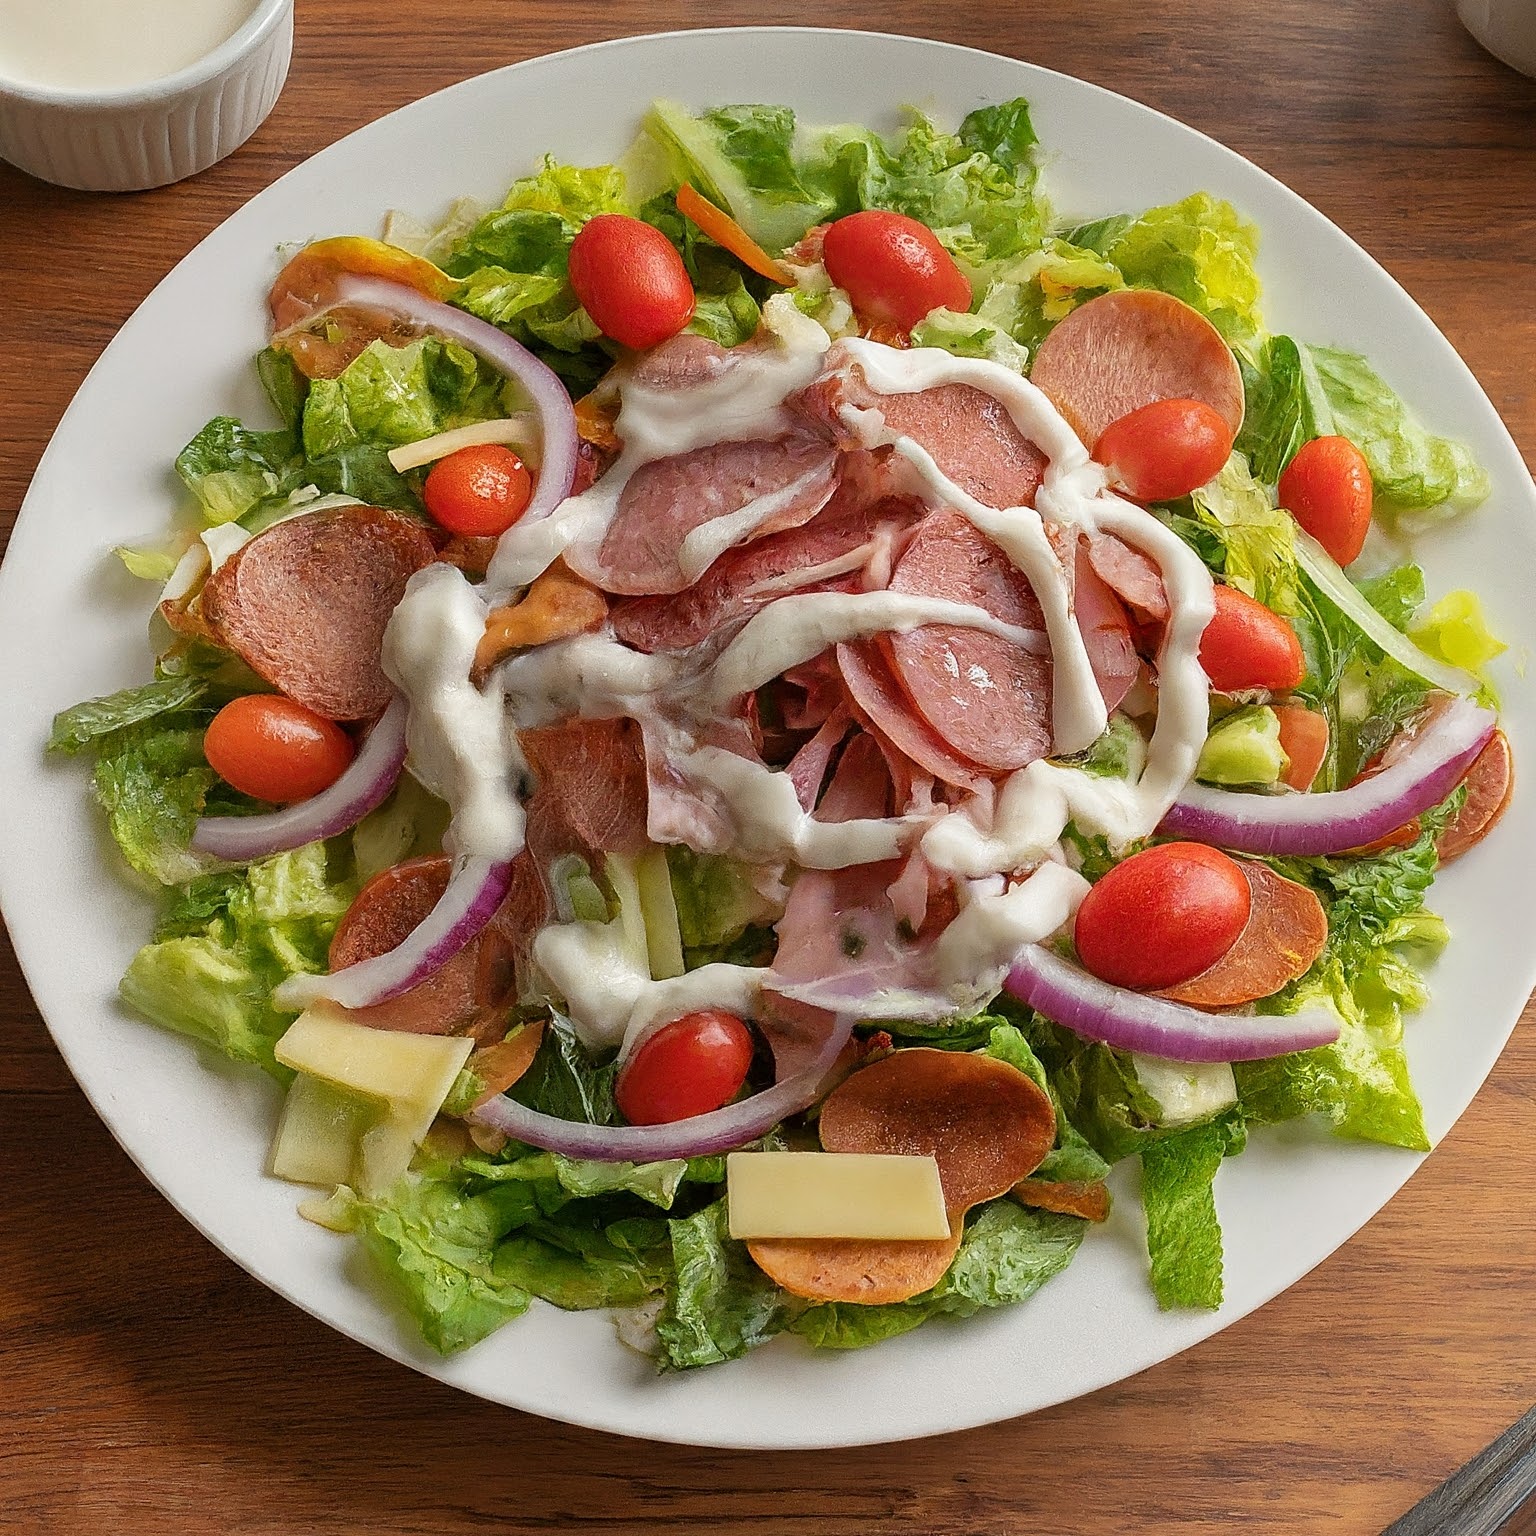 Grinder Salad Recipe